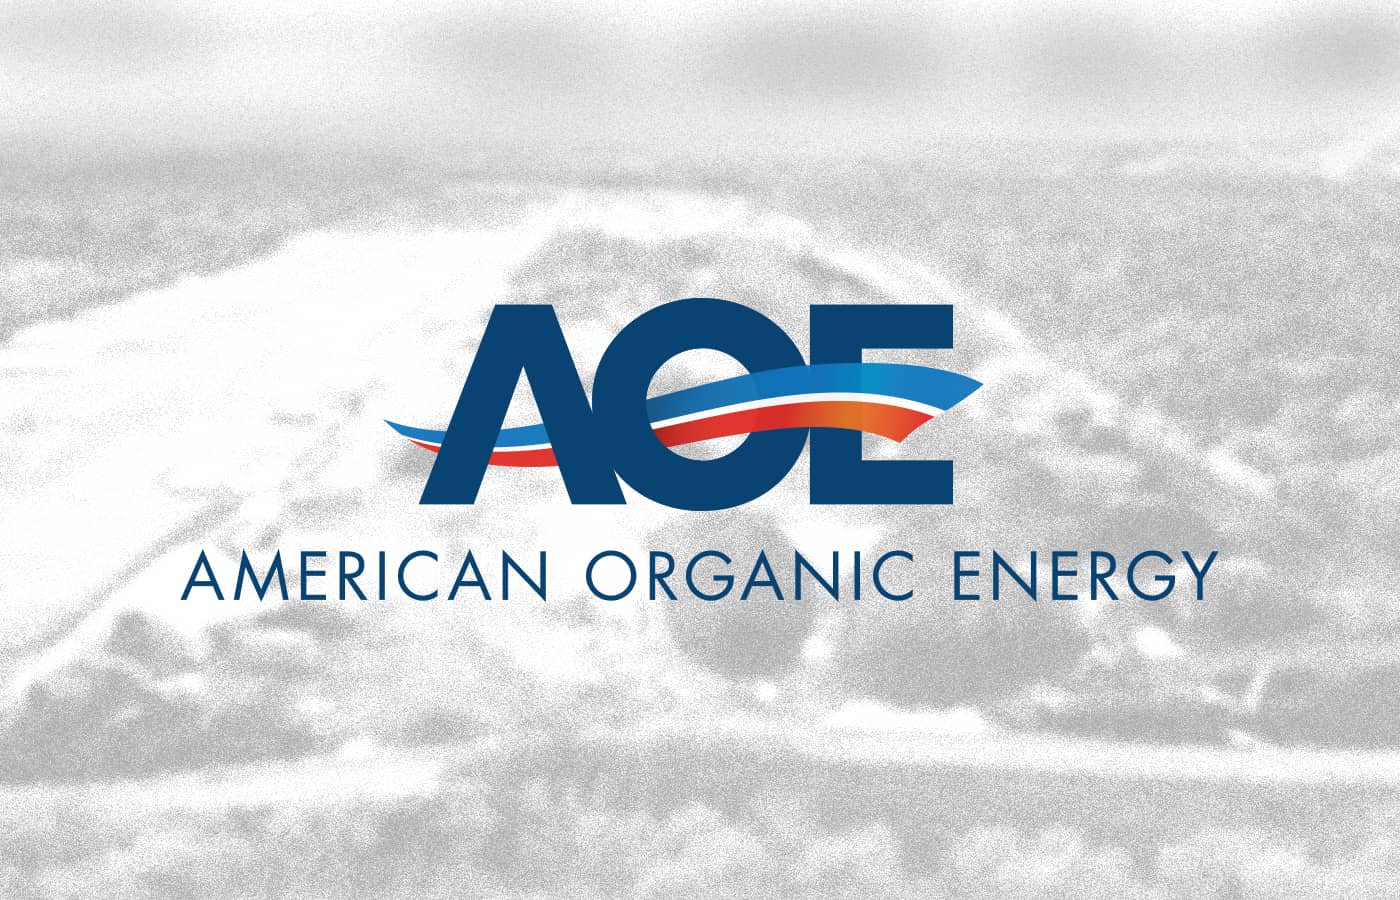 American Organic Energy logo on grainy light background